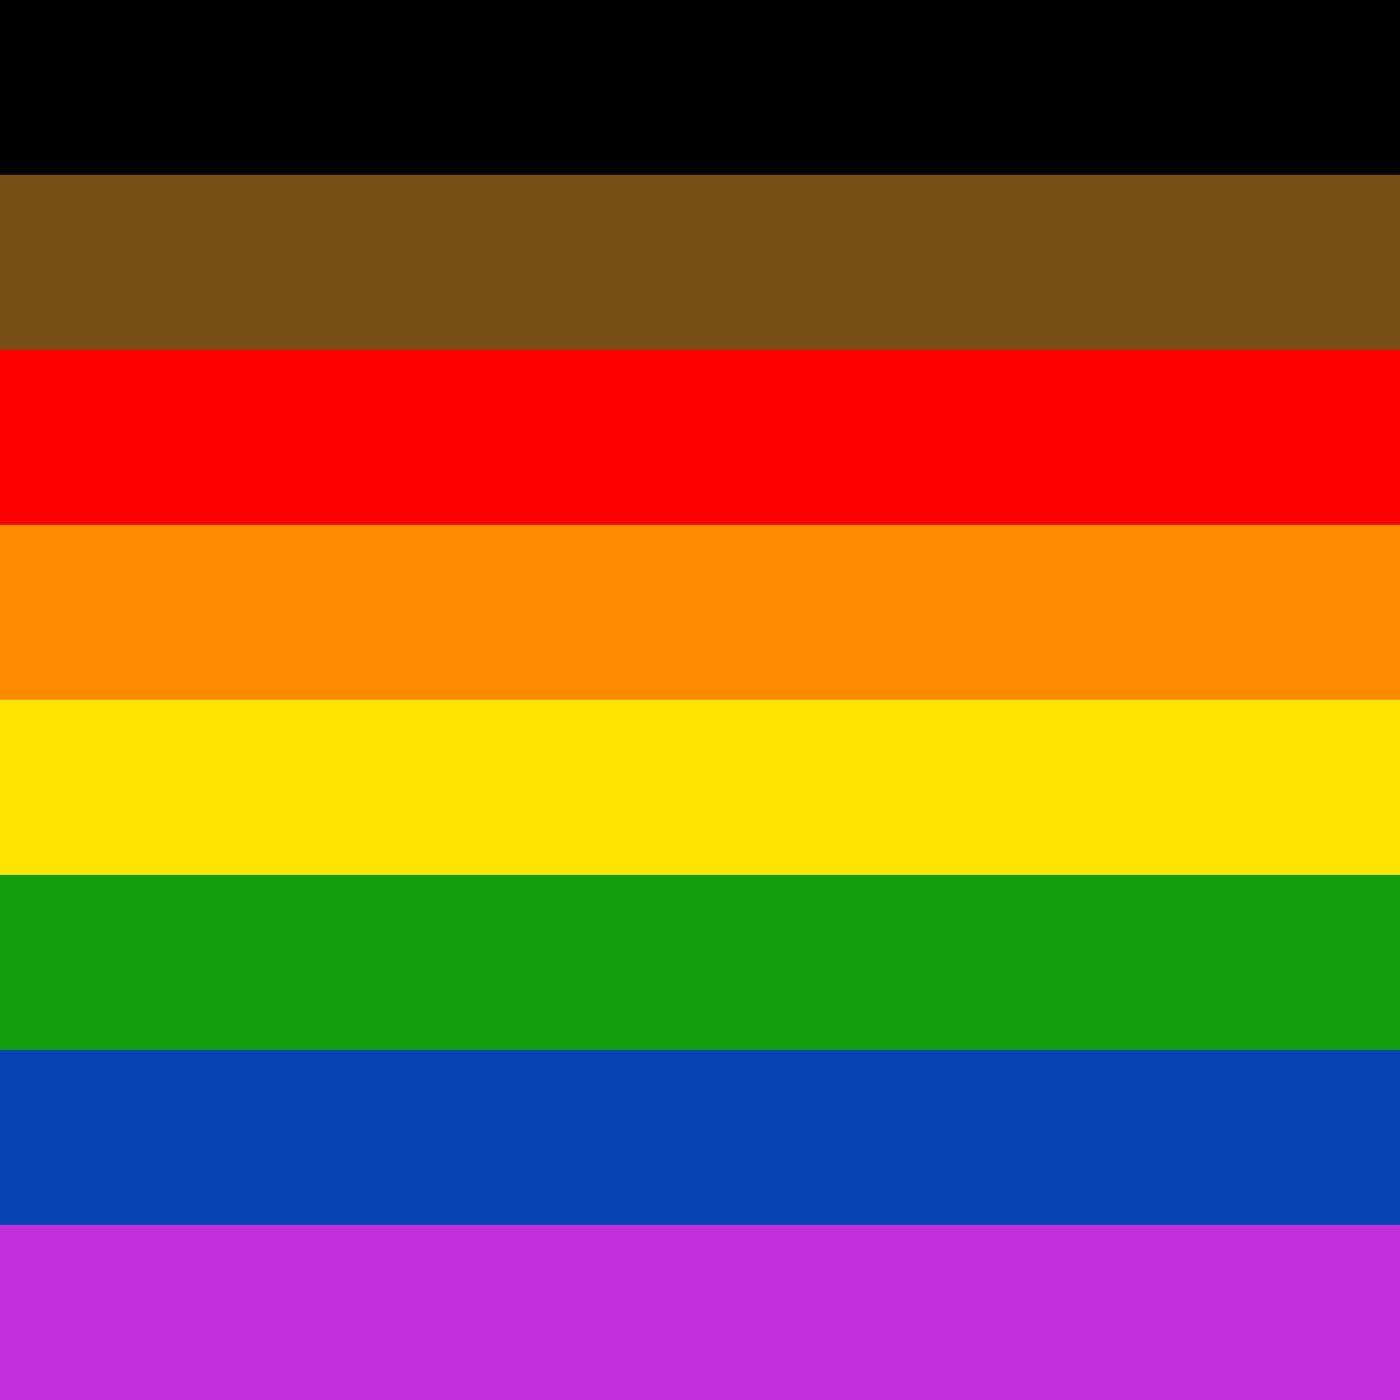 new gay flag design 2021